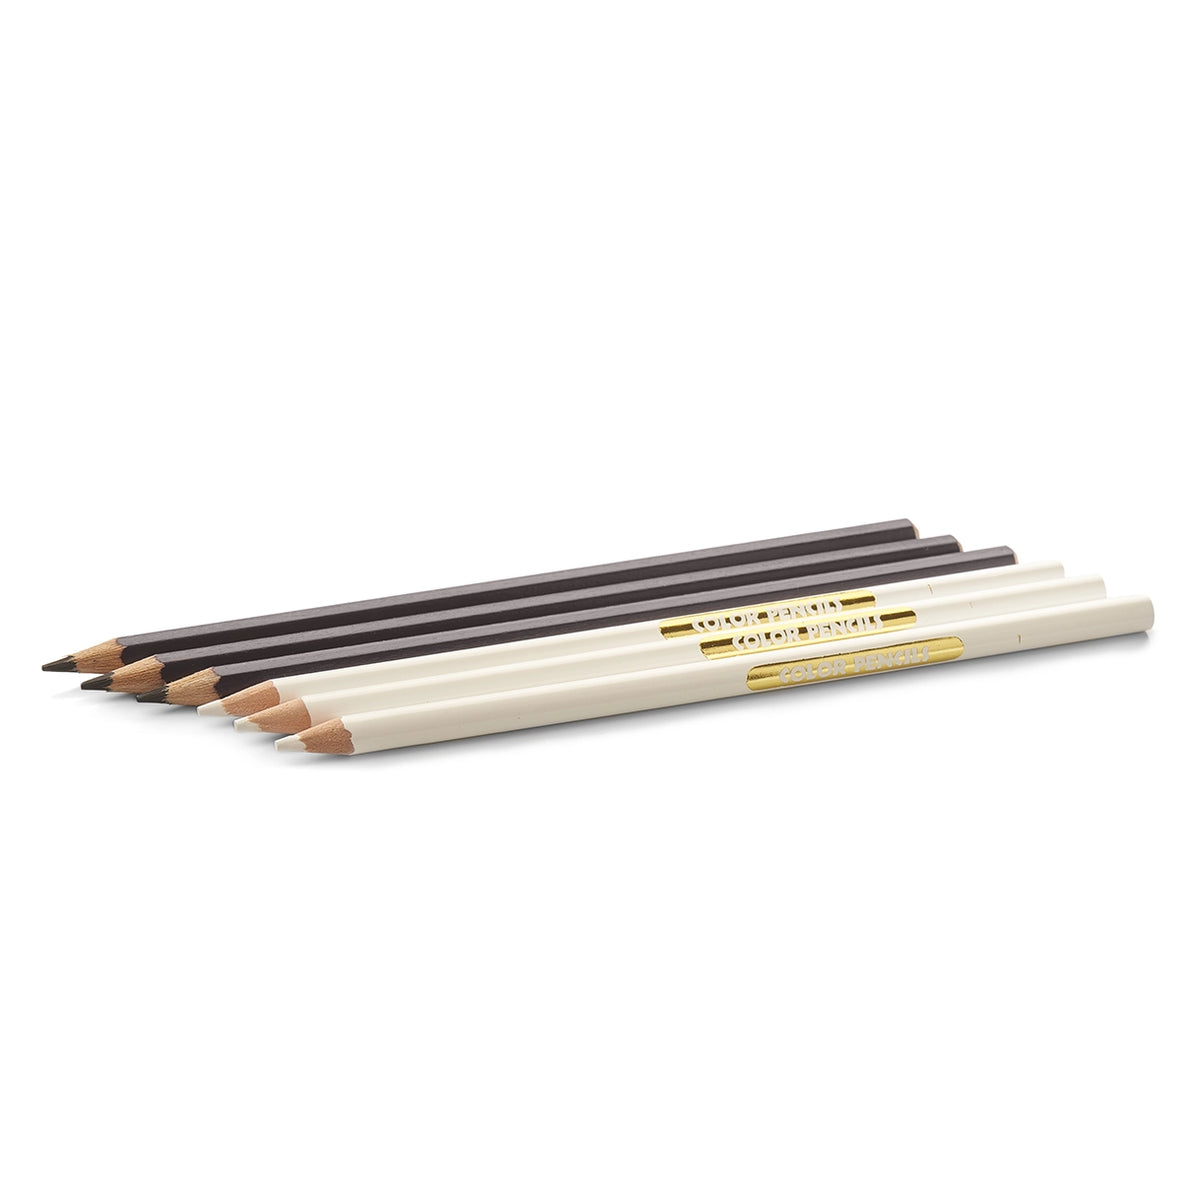 Baulk Marking Pencils